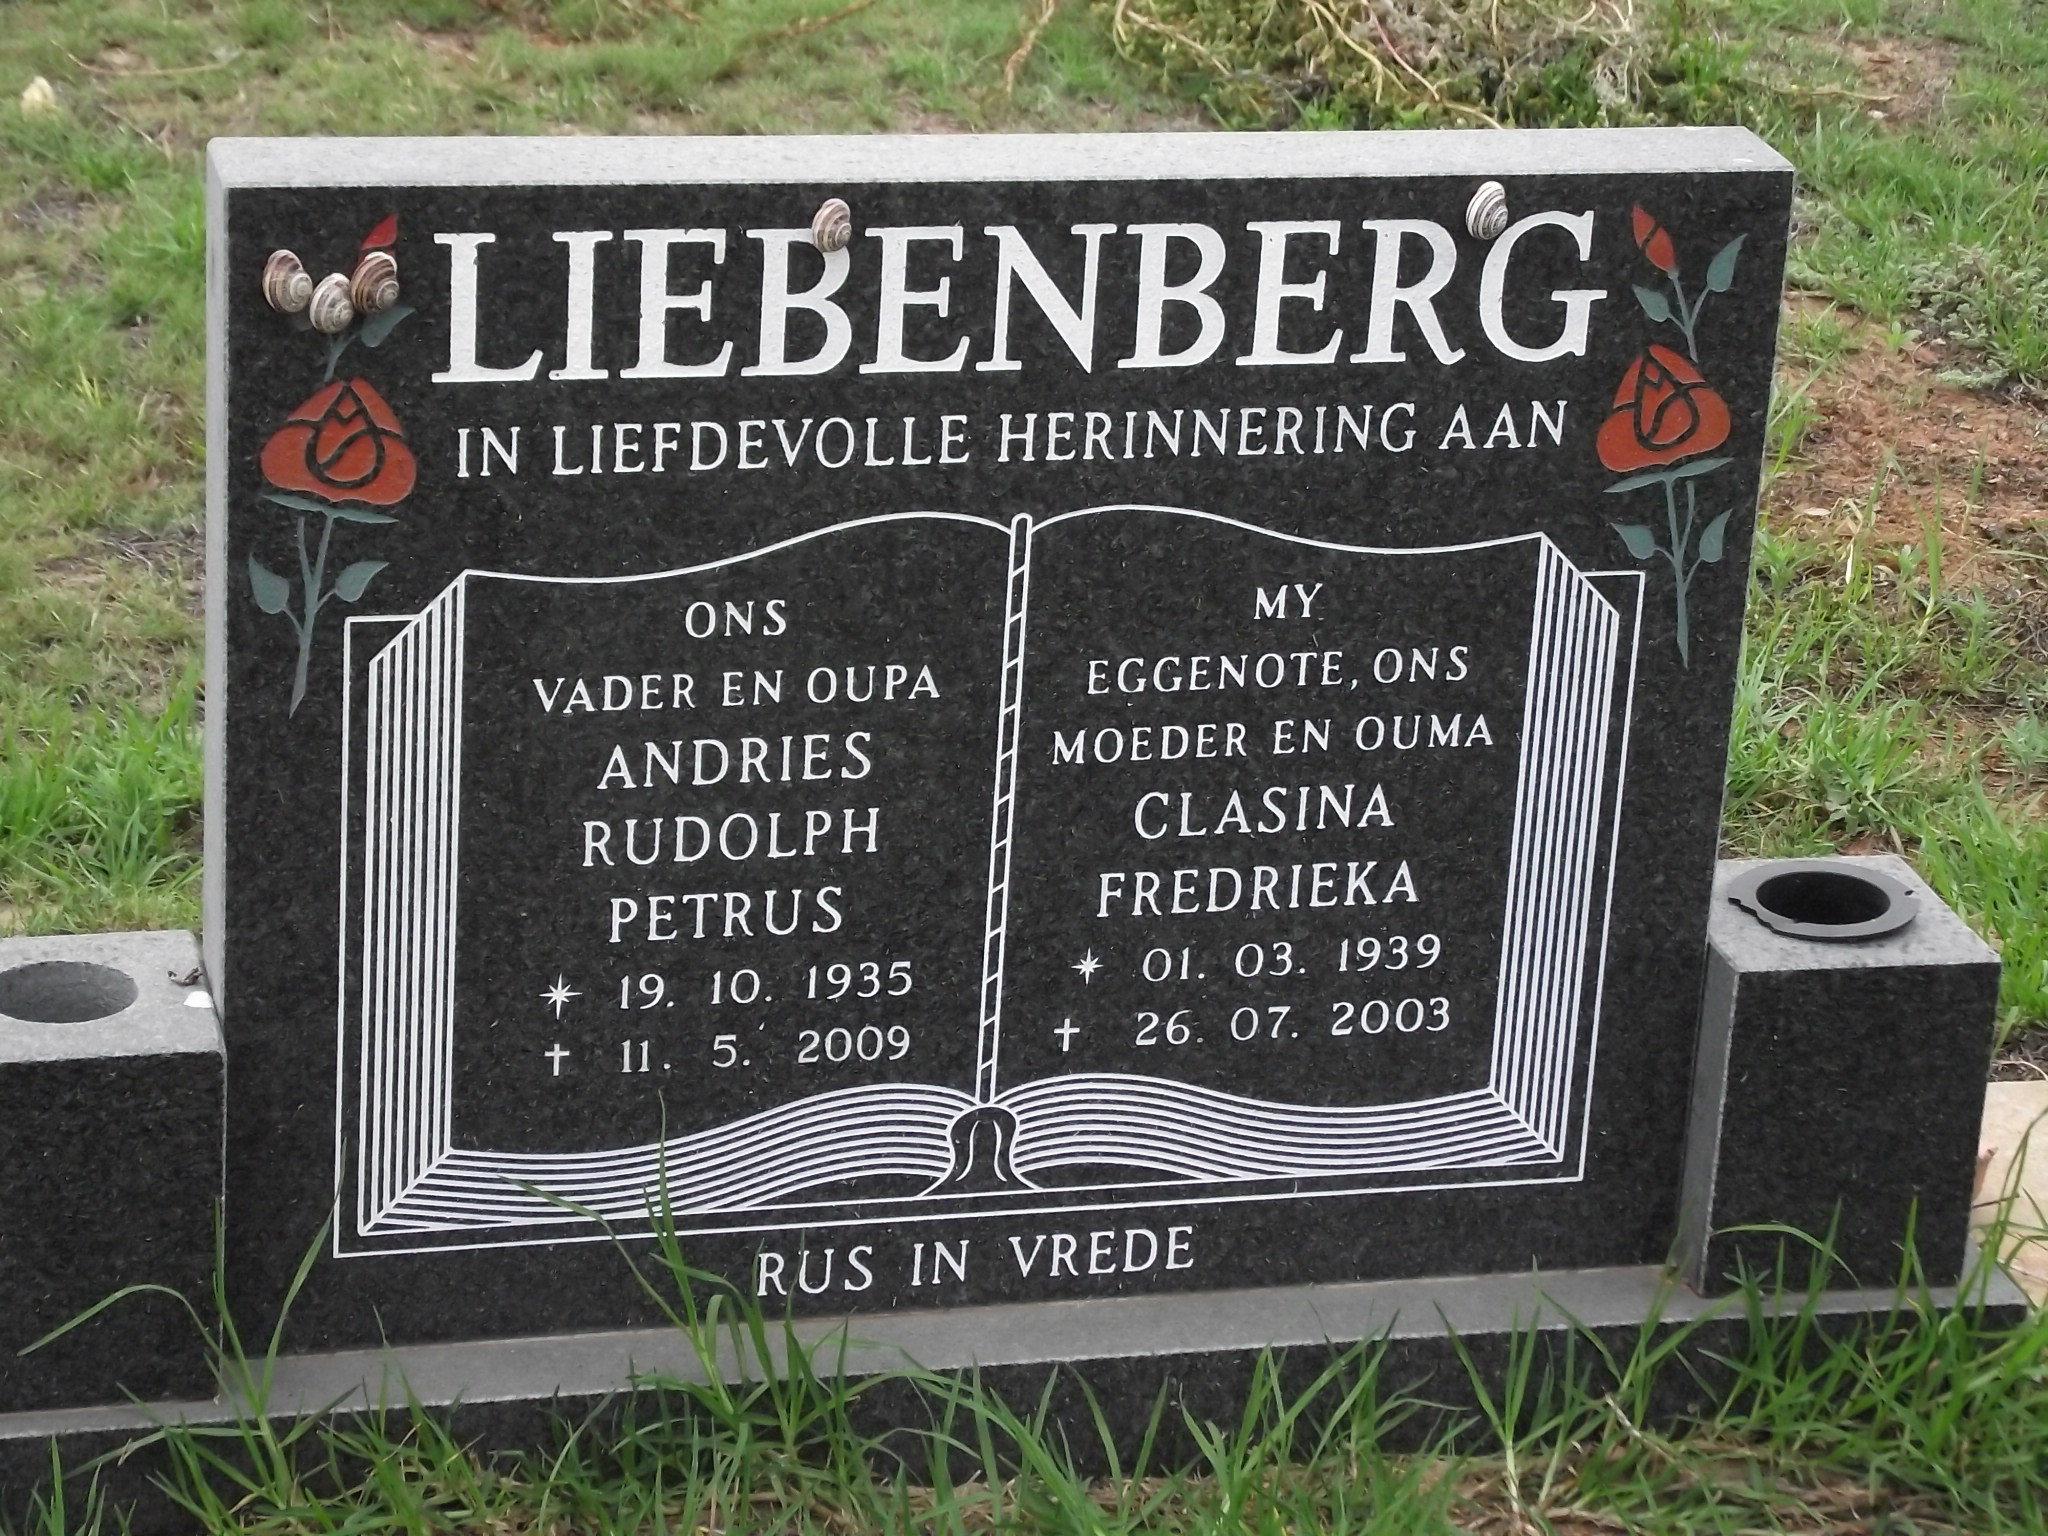 LIEBENBERG Andries Rudolph Petrus 1935-2009 & Clasina Fredrieka 1939-2003